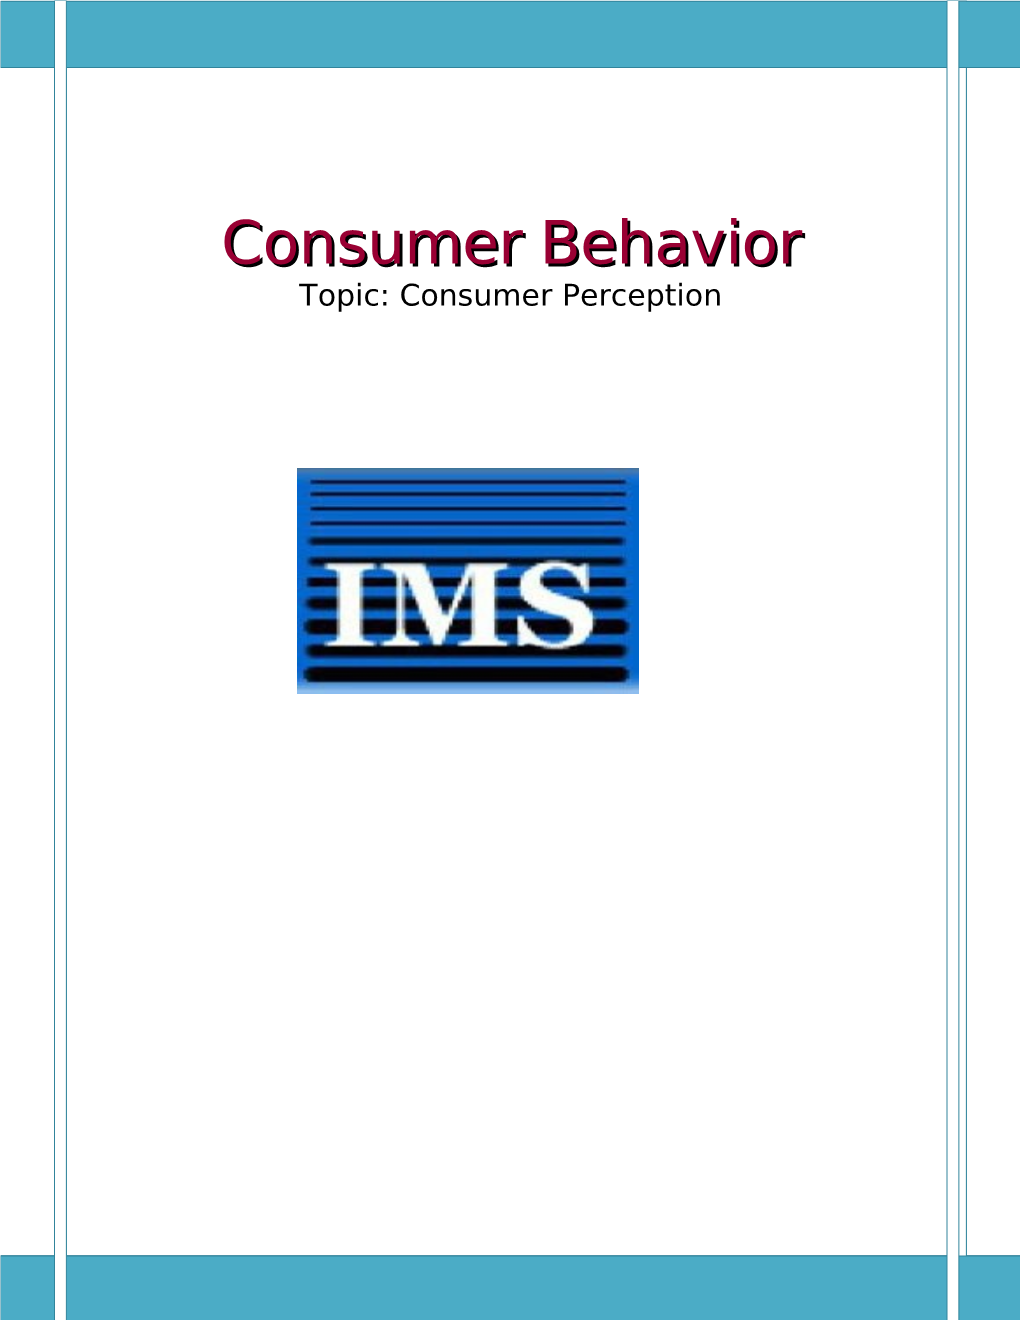 Consumer Behavior Final Project